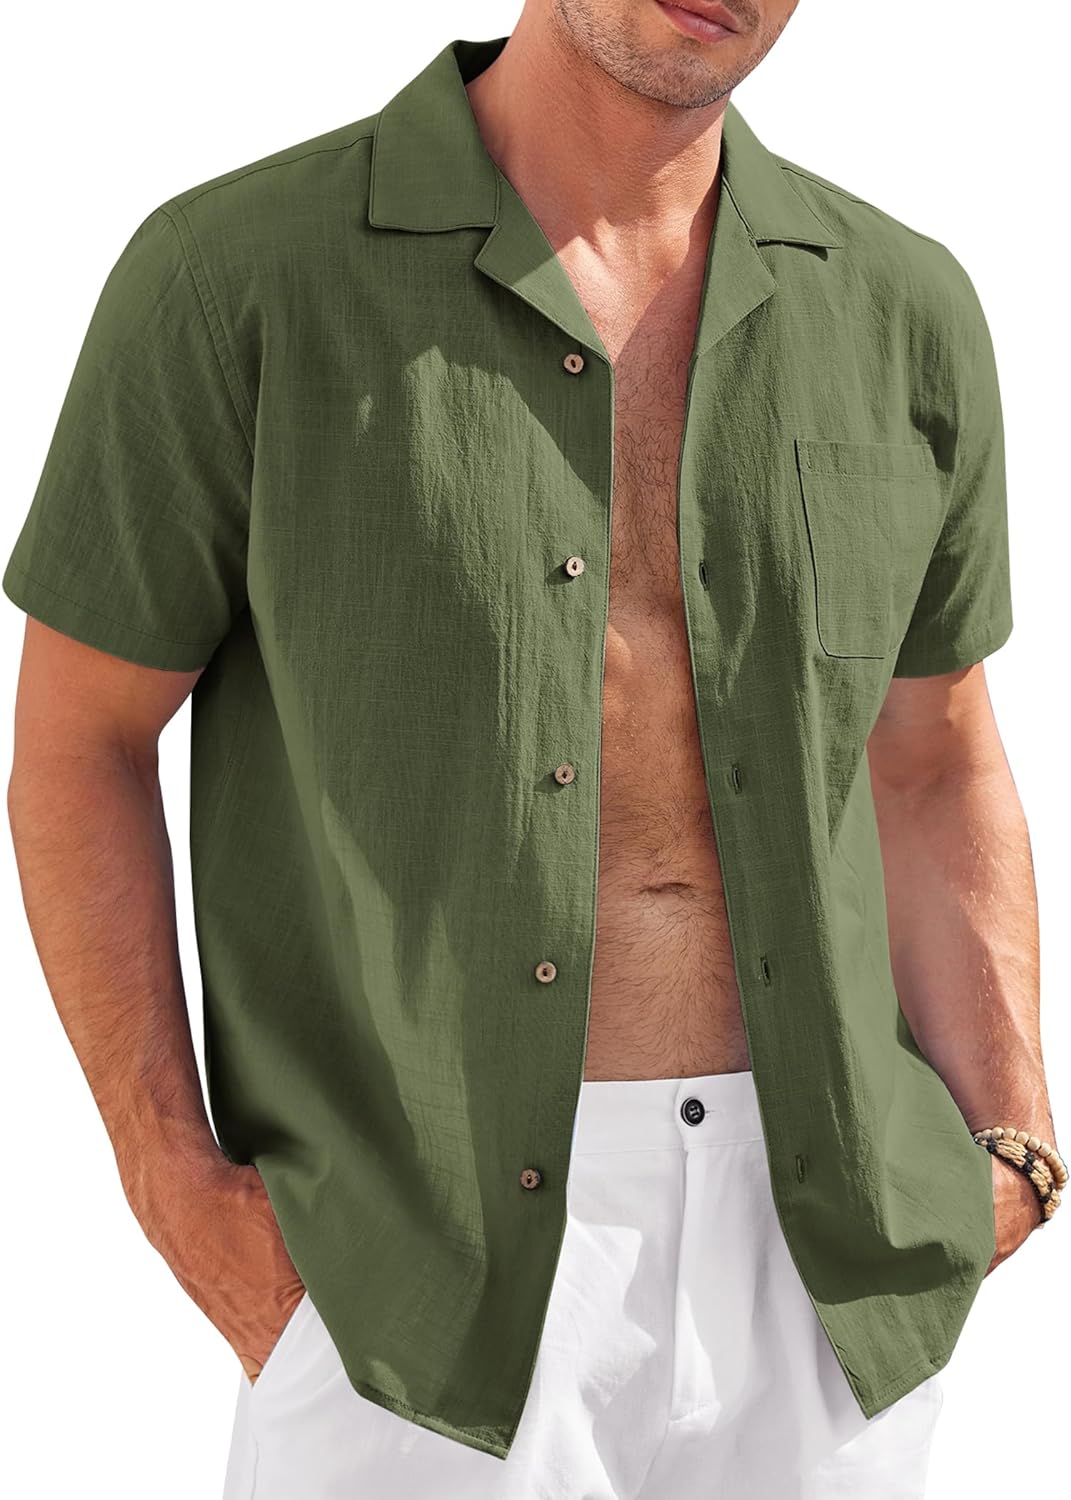 Linen Shirts WholeSale - Price List, Bulk Buy at